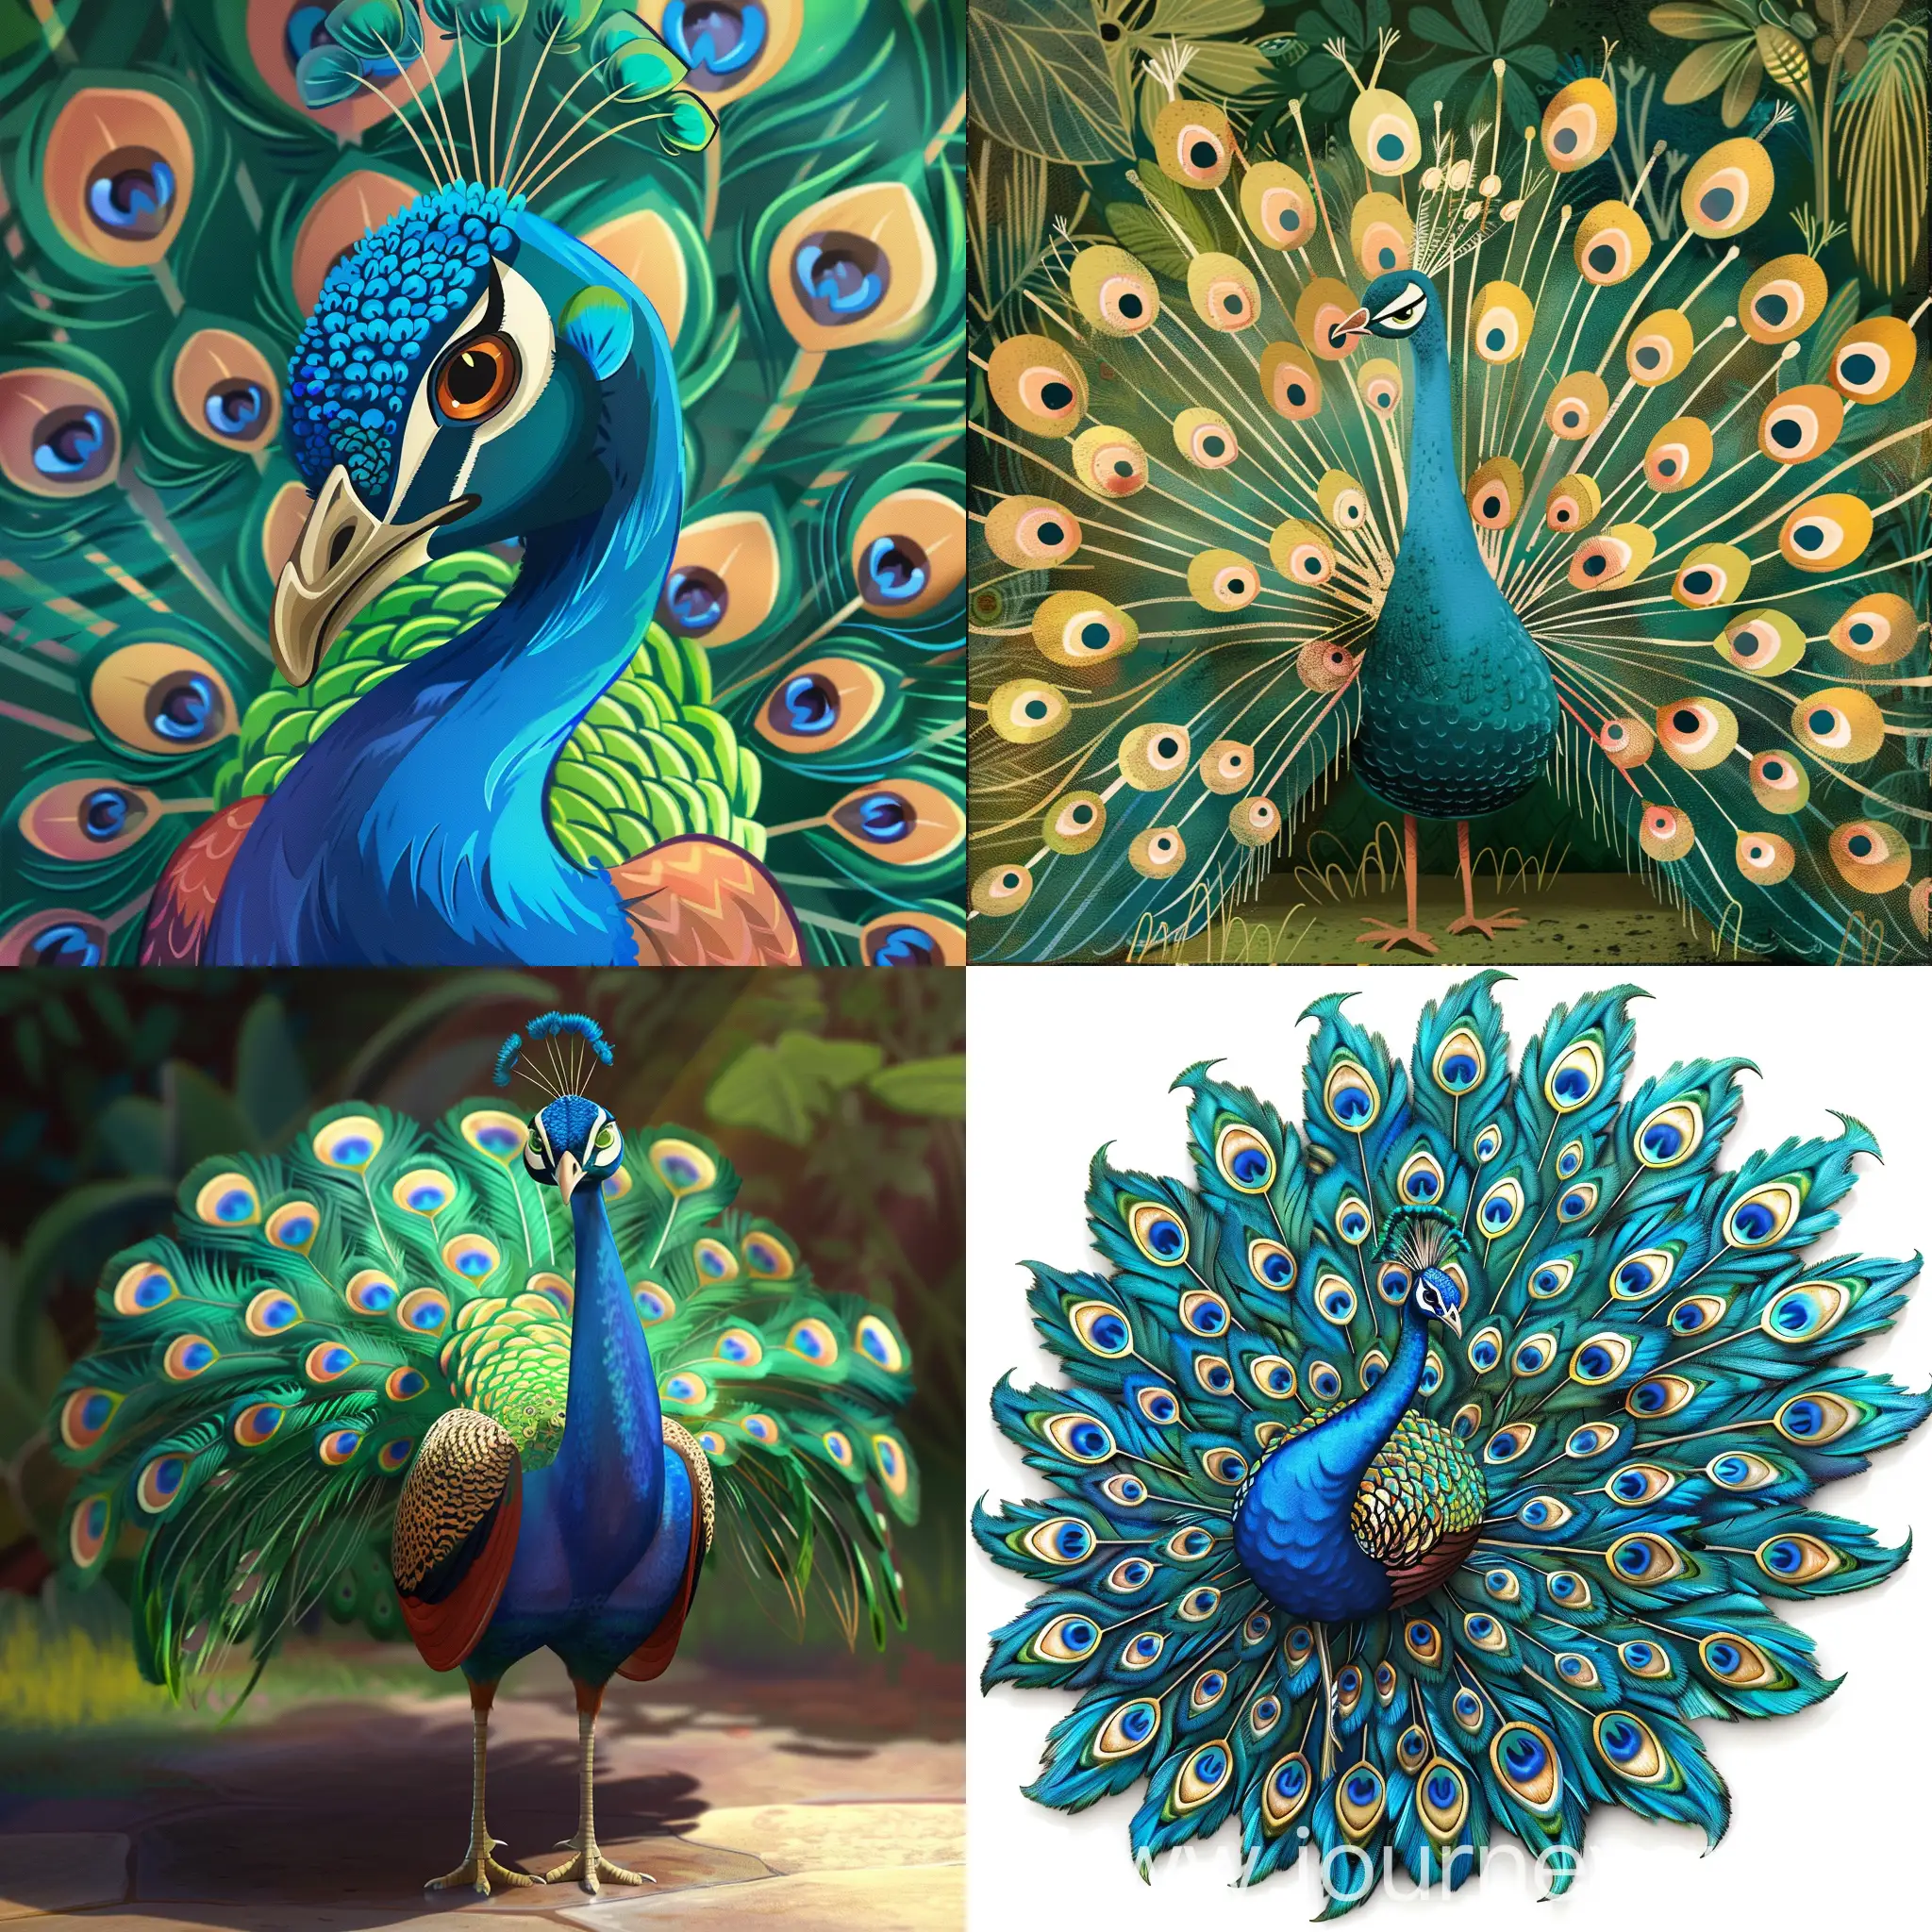 Colorful-Animated-Peacock-Displaying-Plumage